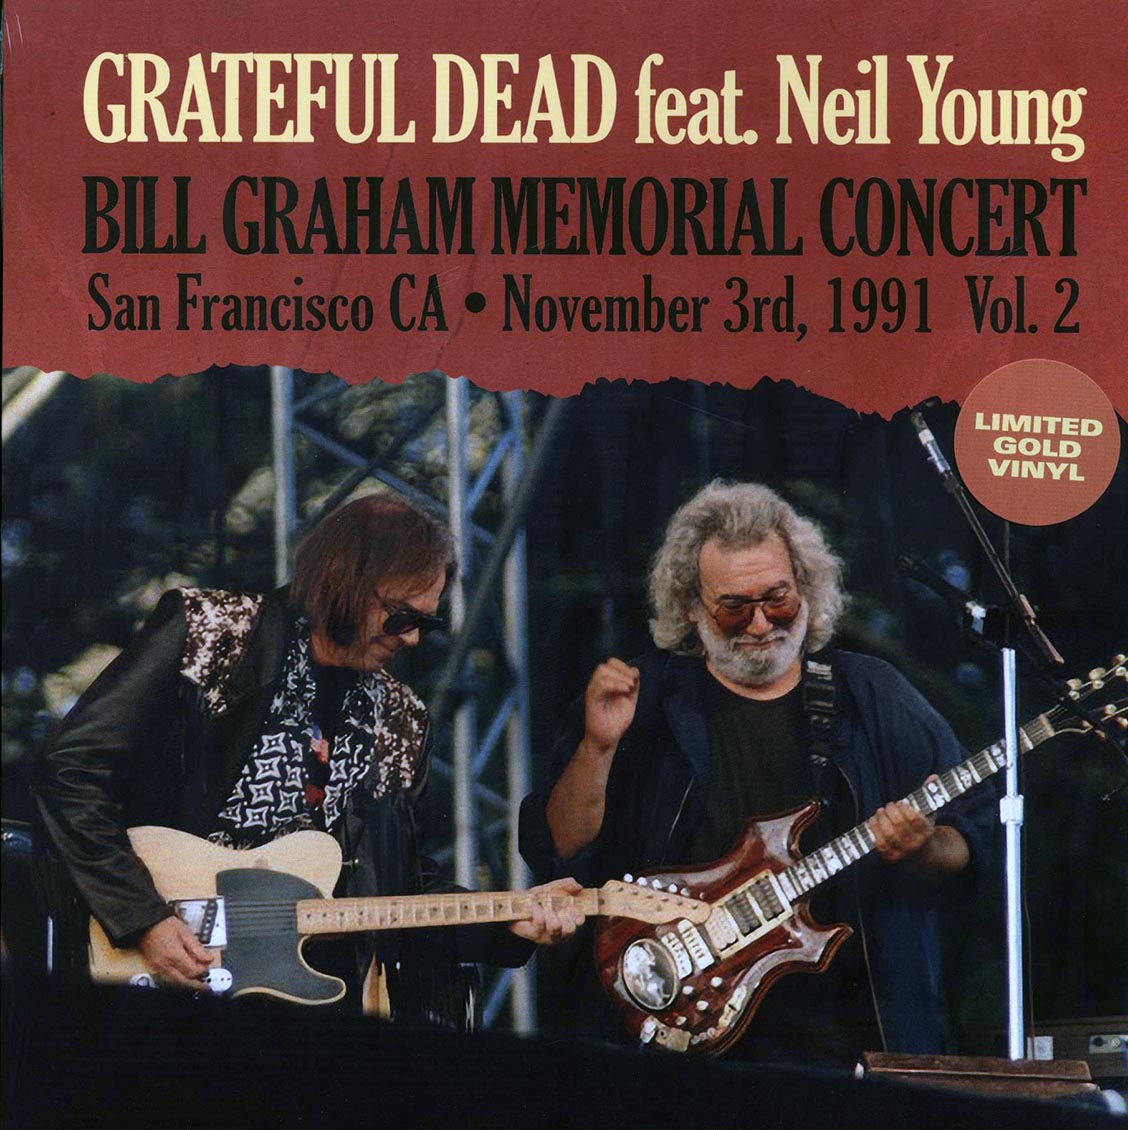 Grateful Dead, Neil Young - Bill Graham Memorial Concert Volume 2: San Francisco CA, November 3rd, 1991 (ltd. 500 copies made) (gold vinyl) - Vinyl LP